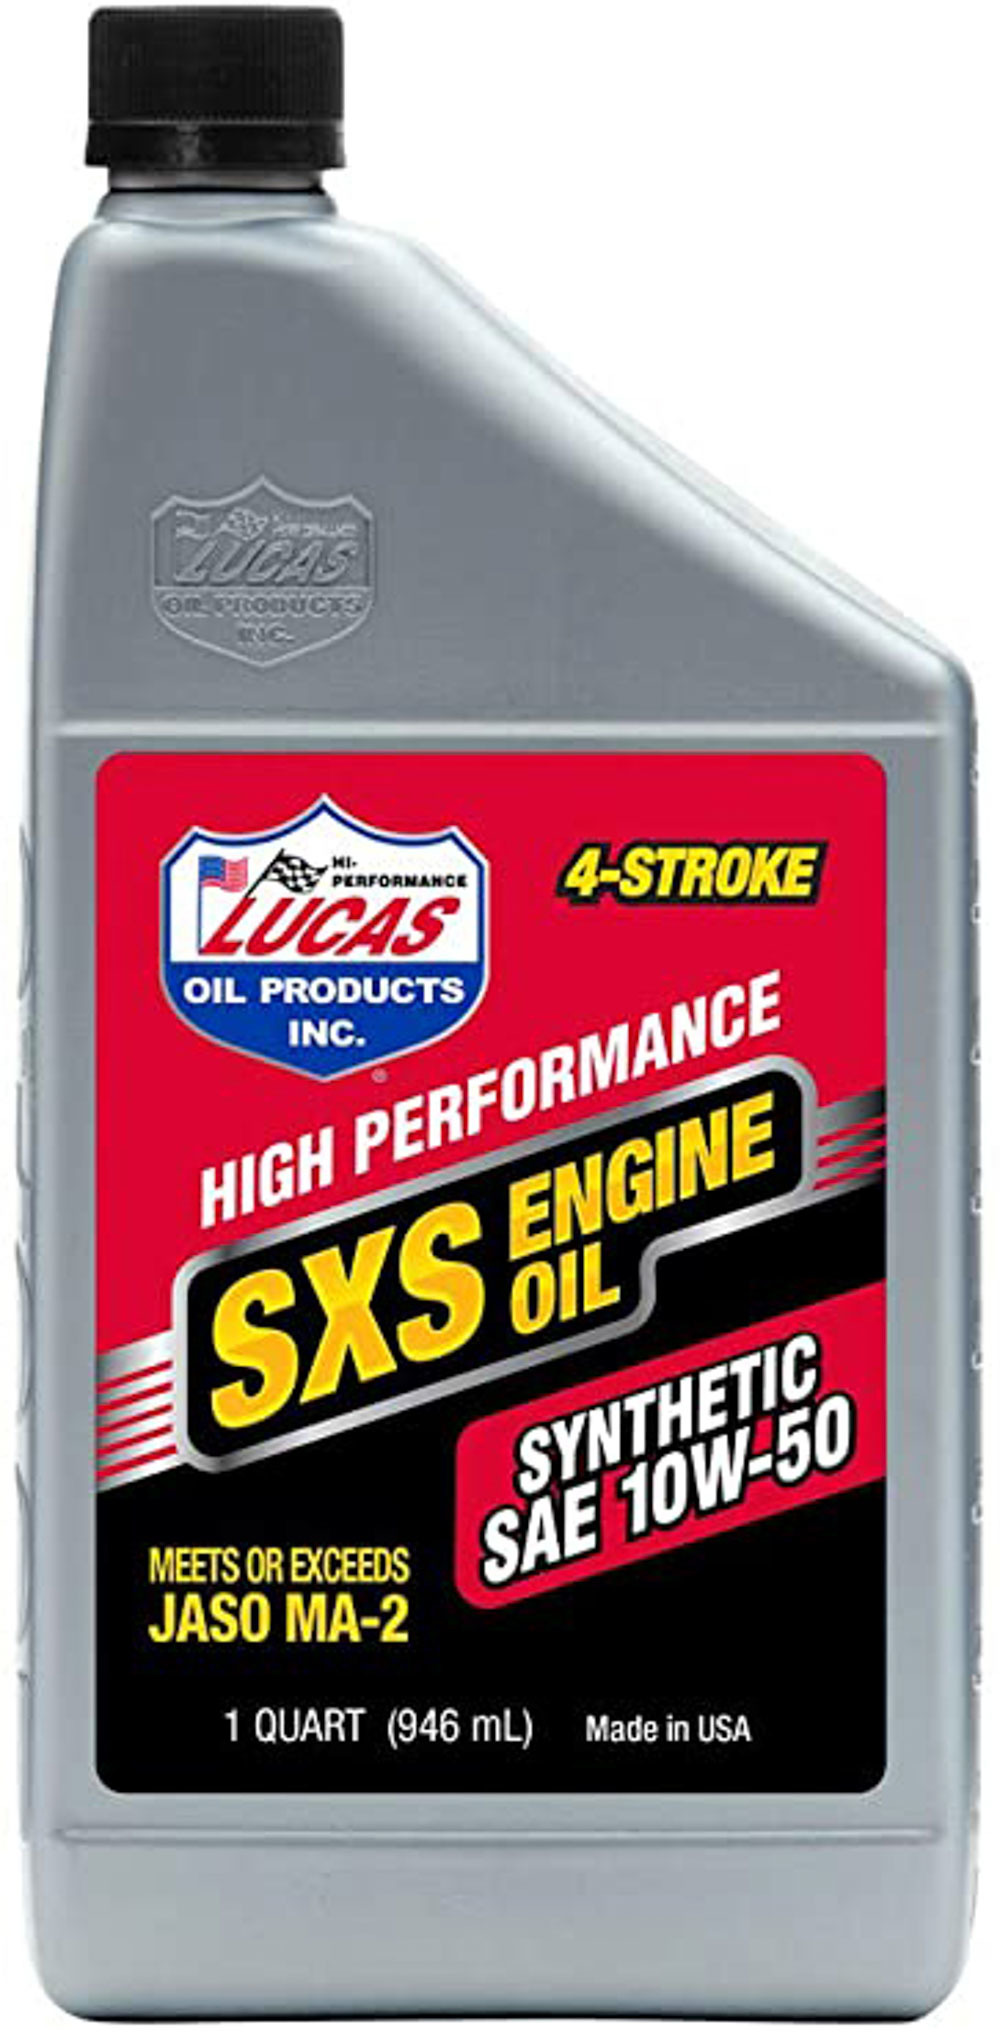 Synthetic 10w50 SXS Oil 1 Quart - 11212